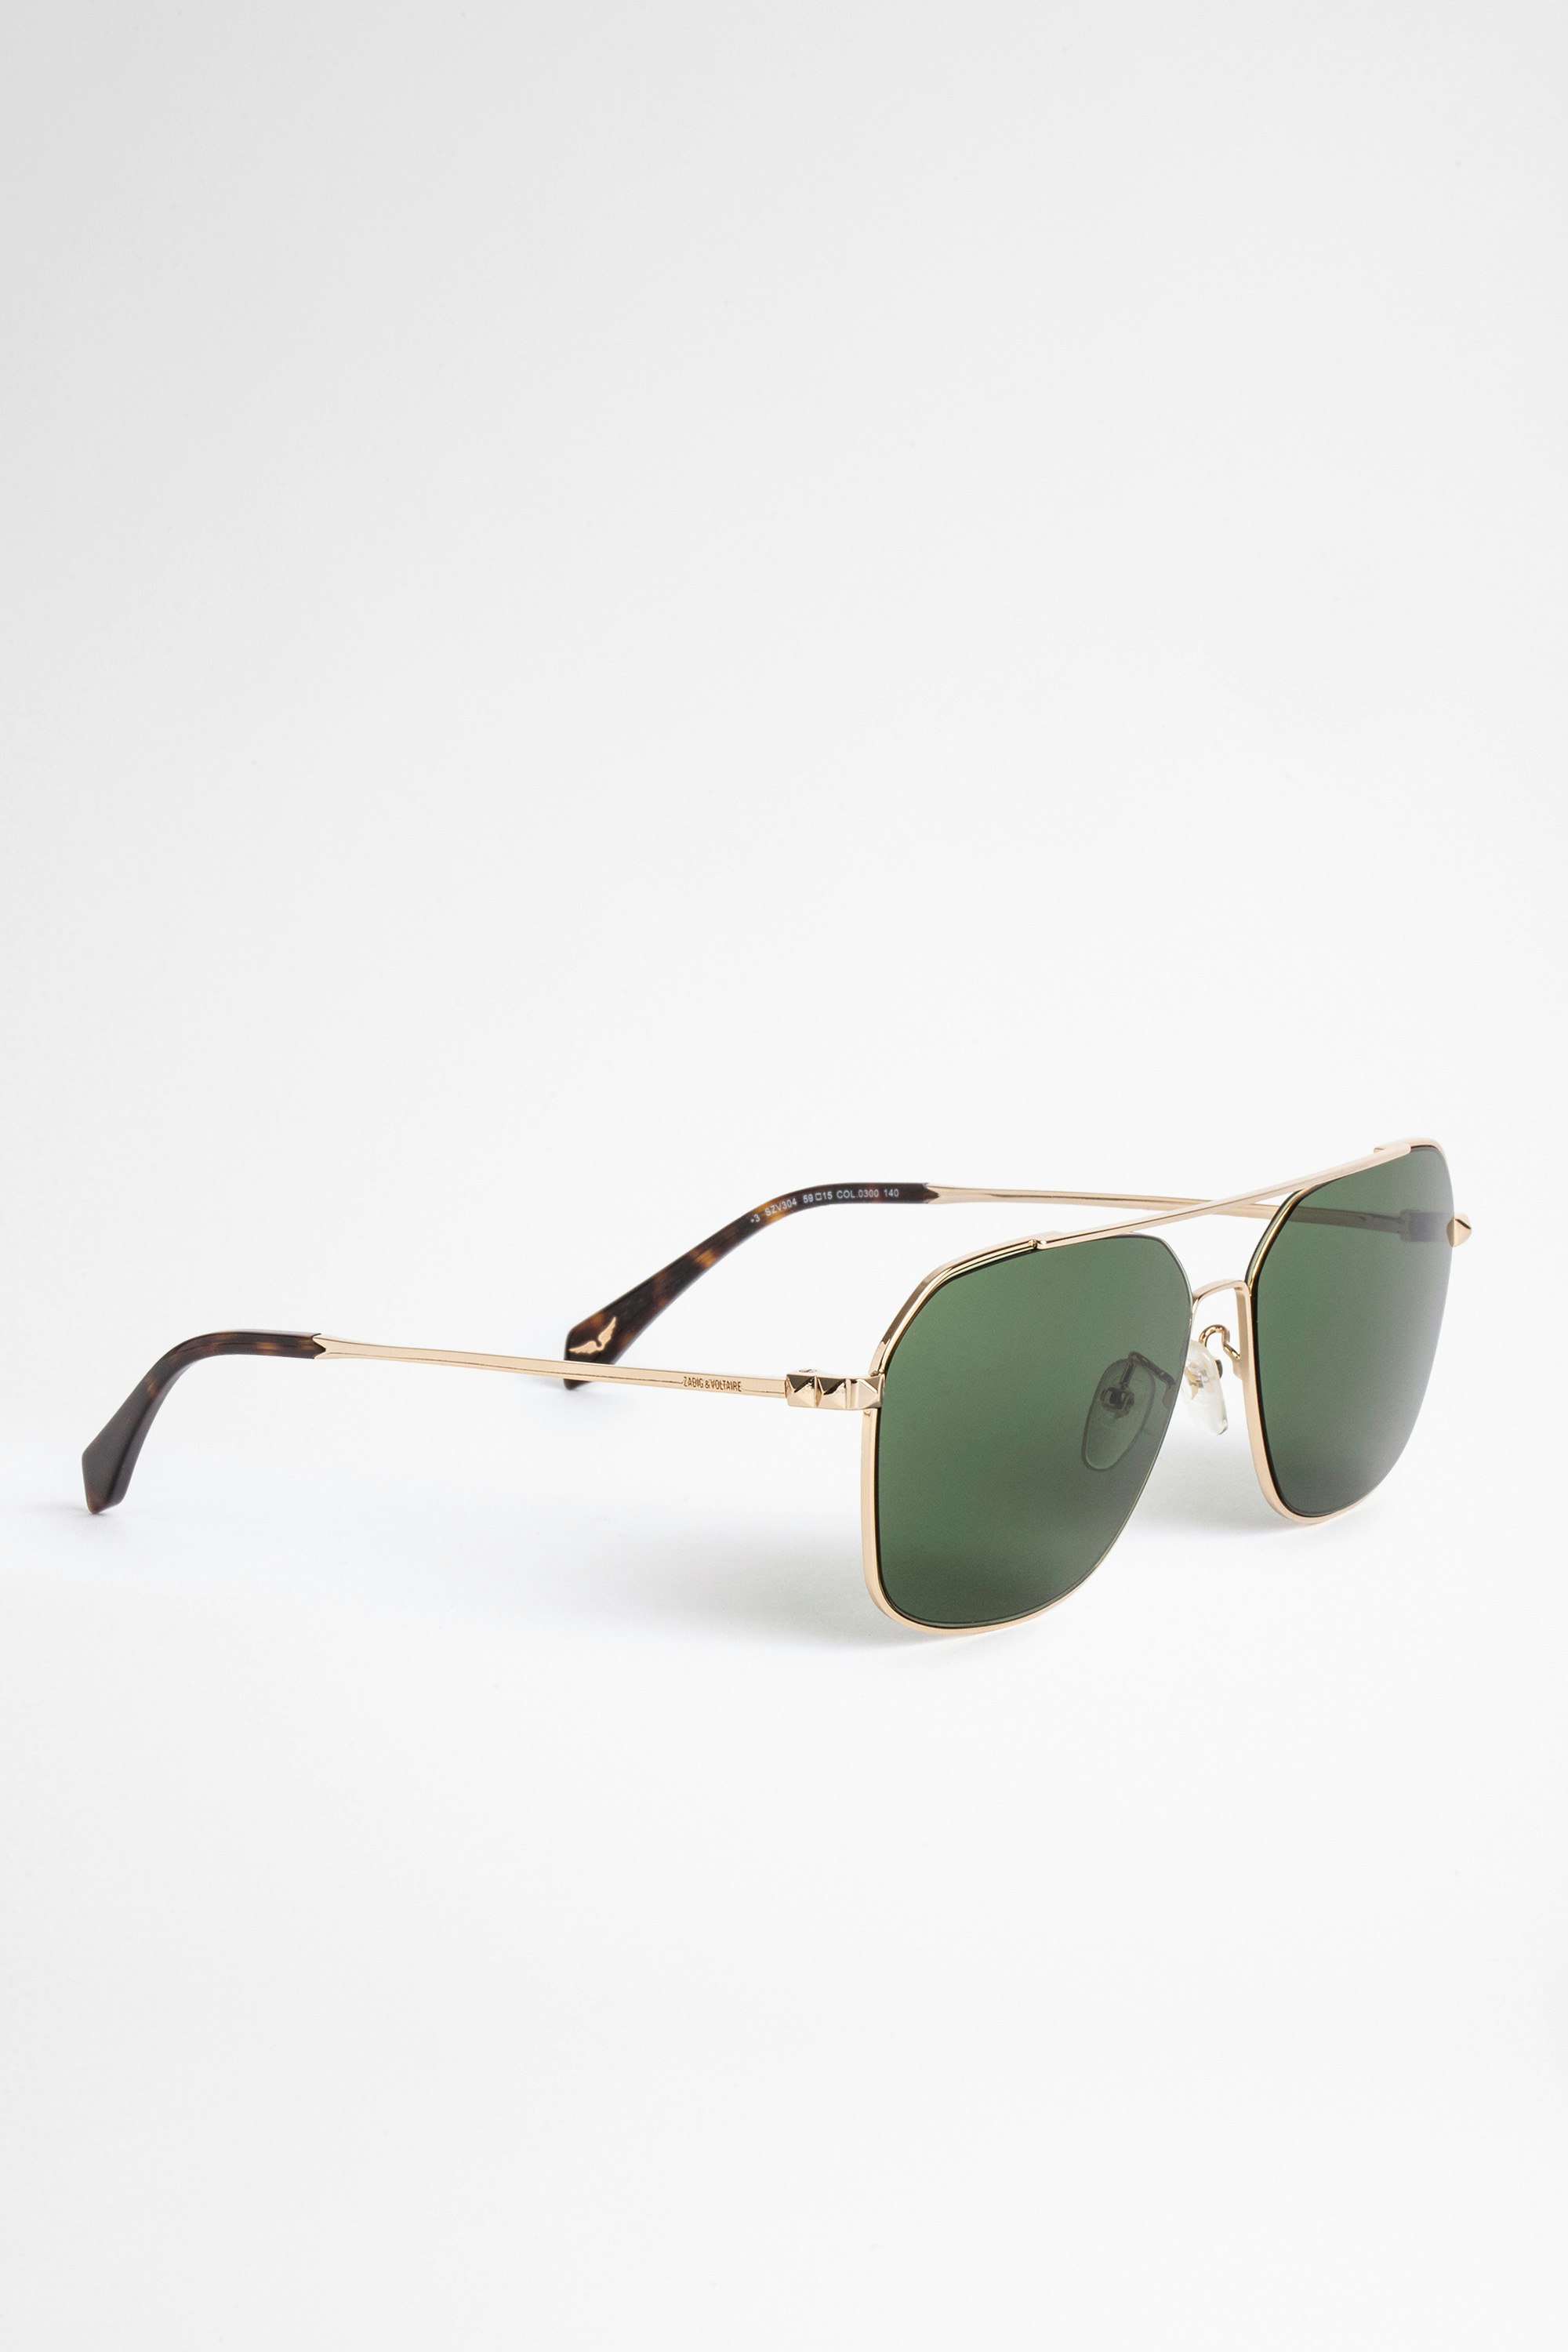 Gafas de sol Shiny Total Rose Gold Zadig&Voltaire unisex gold acetate sunglasses.